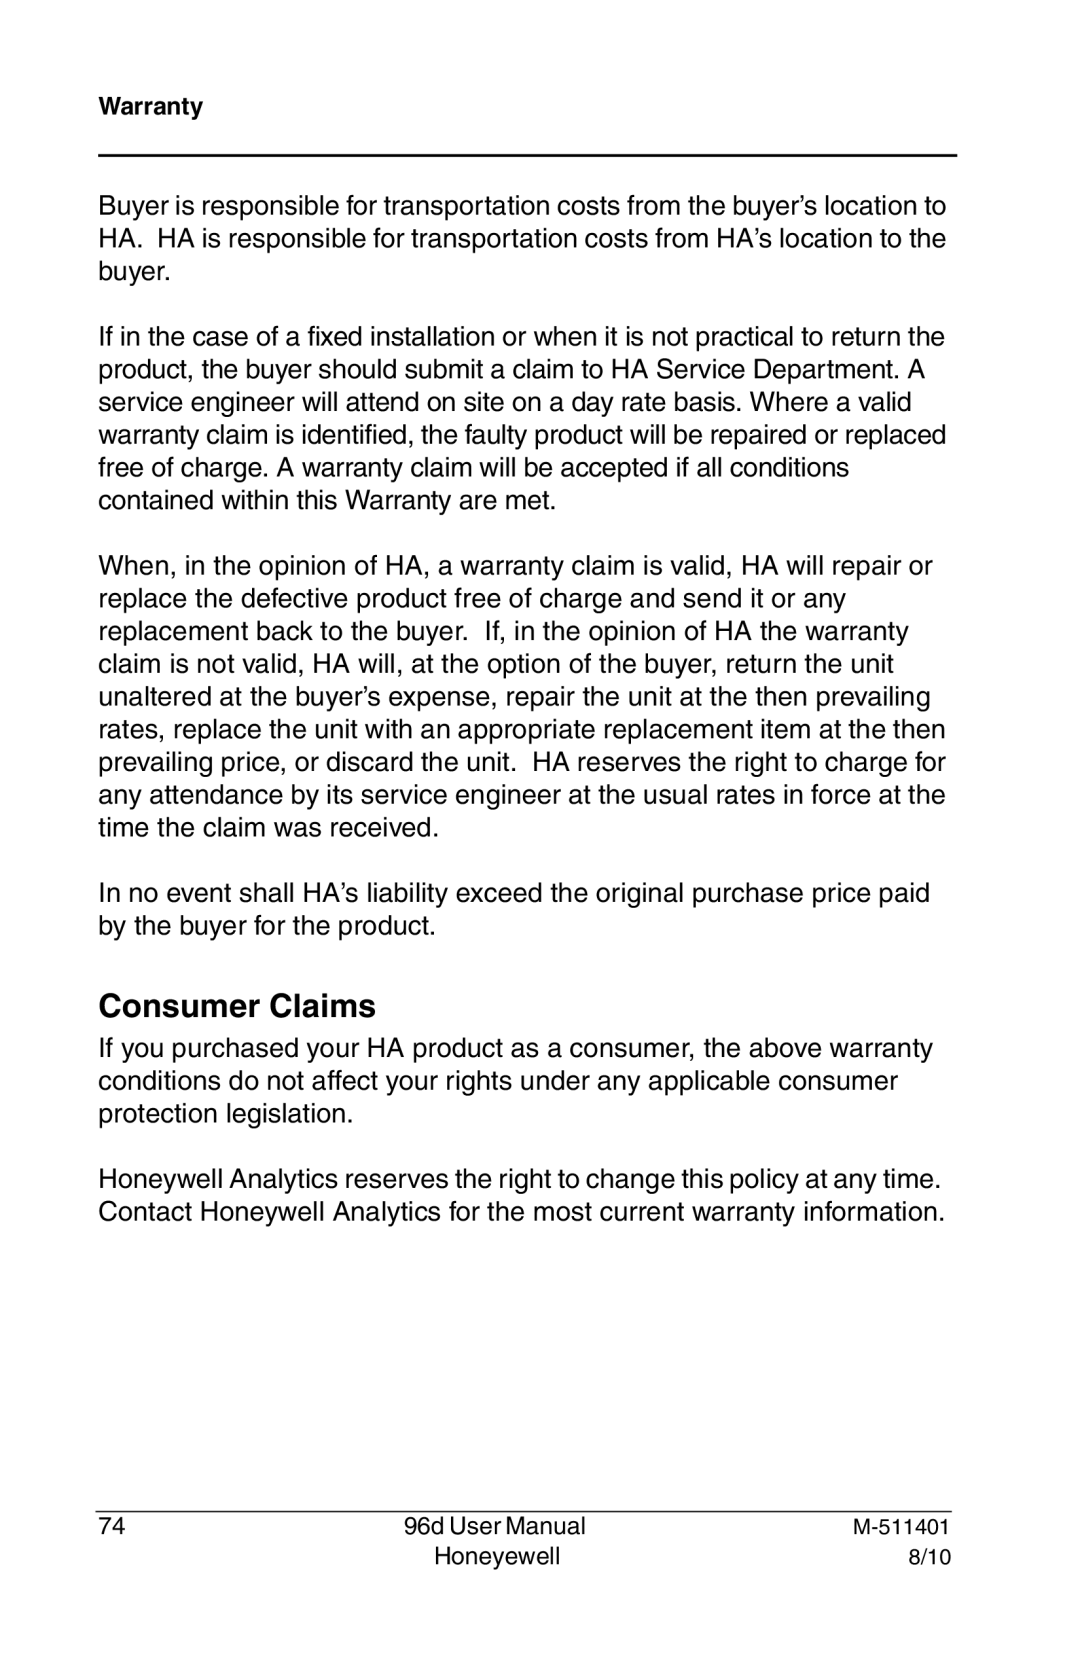 Honeywell 96D user manual Consumer Claims, Warranty 